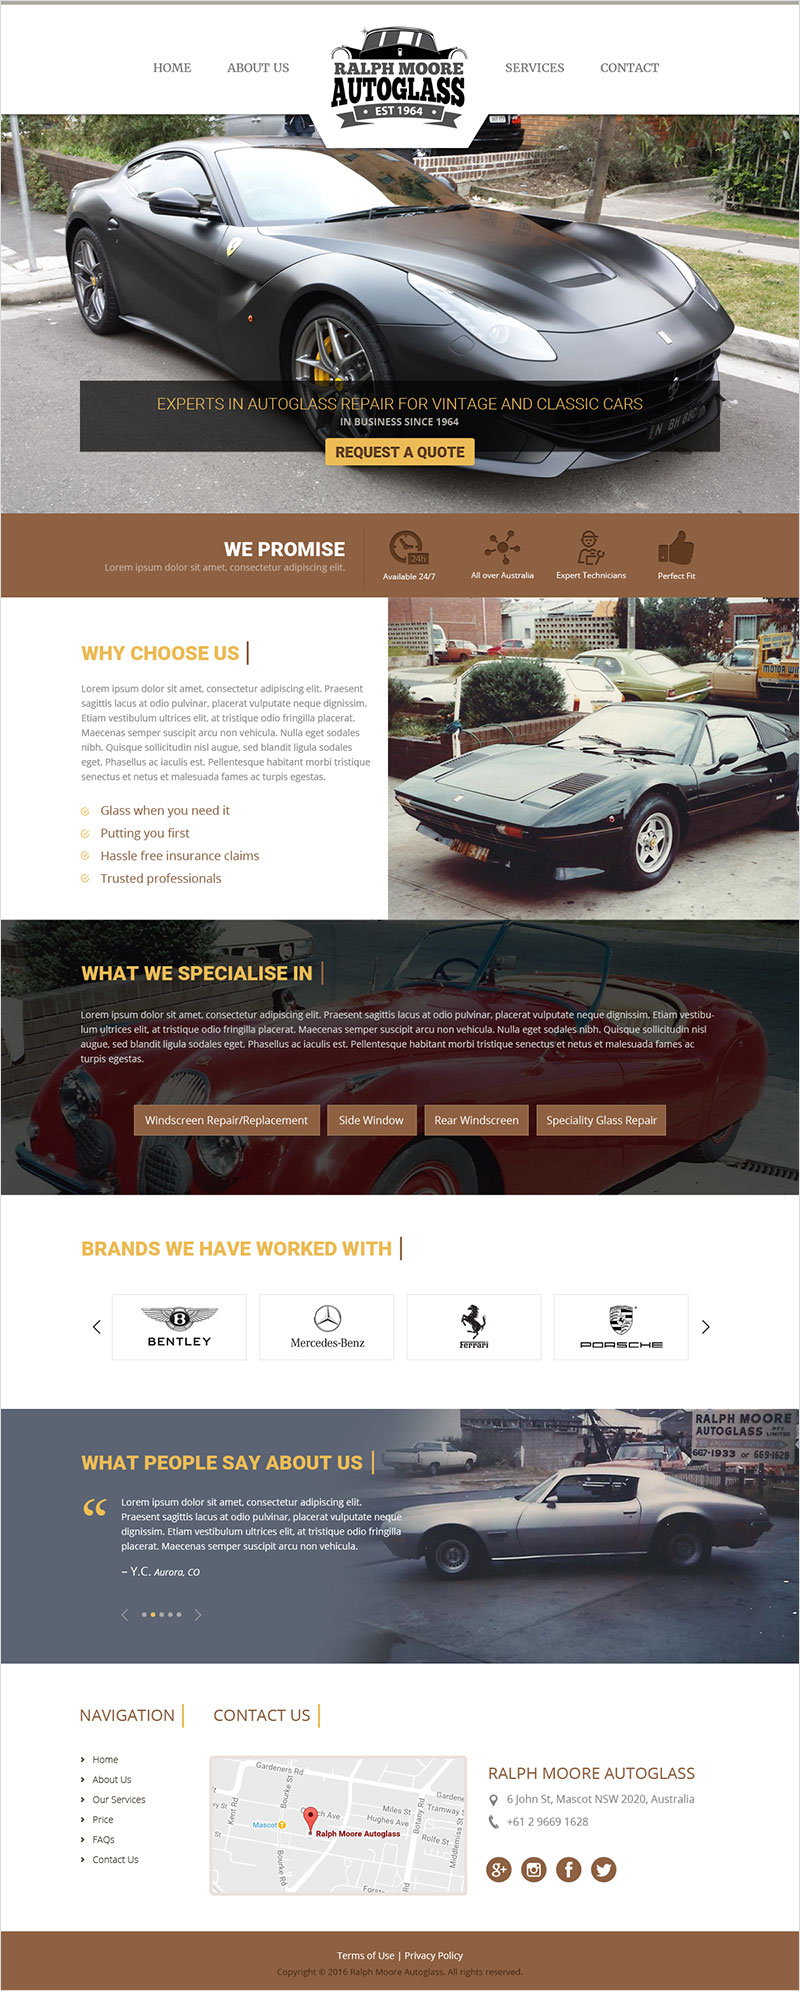 Ralph Moore Auto Glass - Website Design